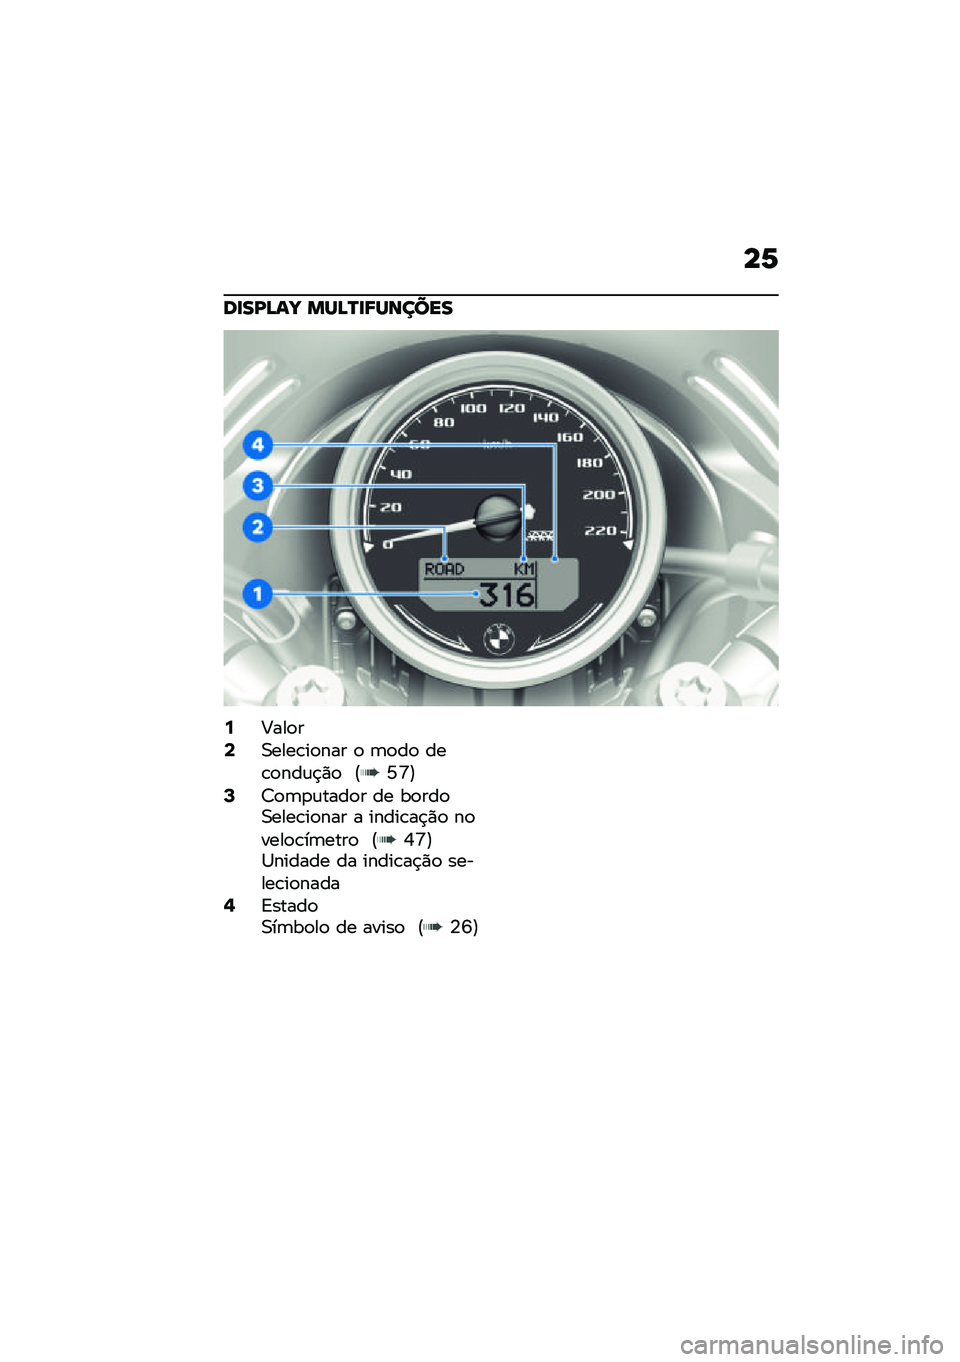 BMW MOTORRAD R NINE T URVAN G/S 2021  Manual do condutor (in Portuguese) ��6
��
��D�A��c ���A�P�
�;������
�6�C���
��8�0����\b��
��� �
 �	�
��
 ���\b�
���\f�$�)�
 �?�X�S�@�:�7�
�	�
�\f����
� �� ��
���
�0����\b��
��� � �����\b�